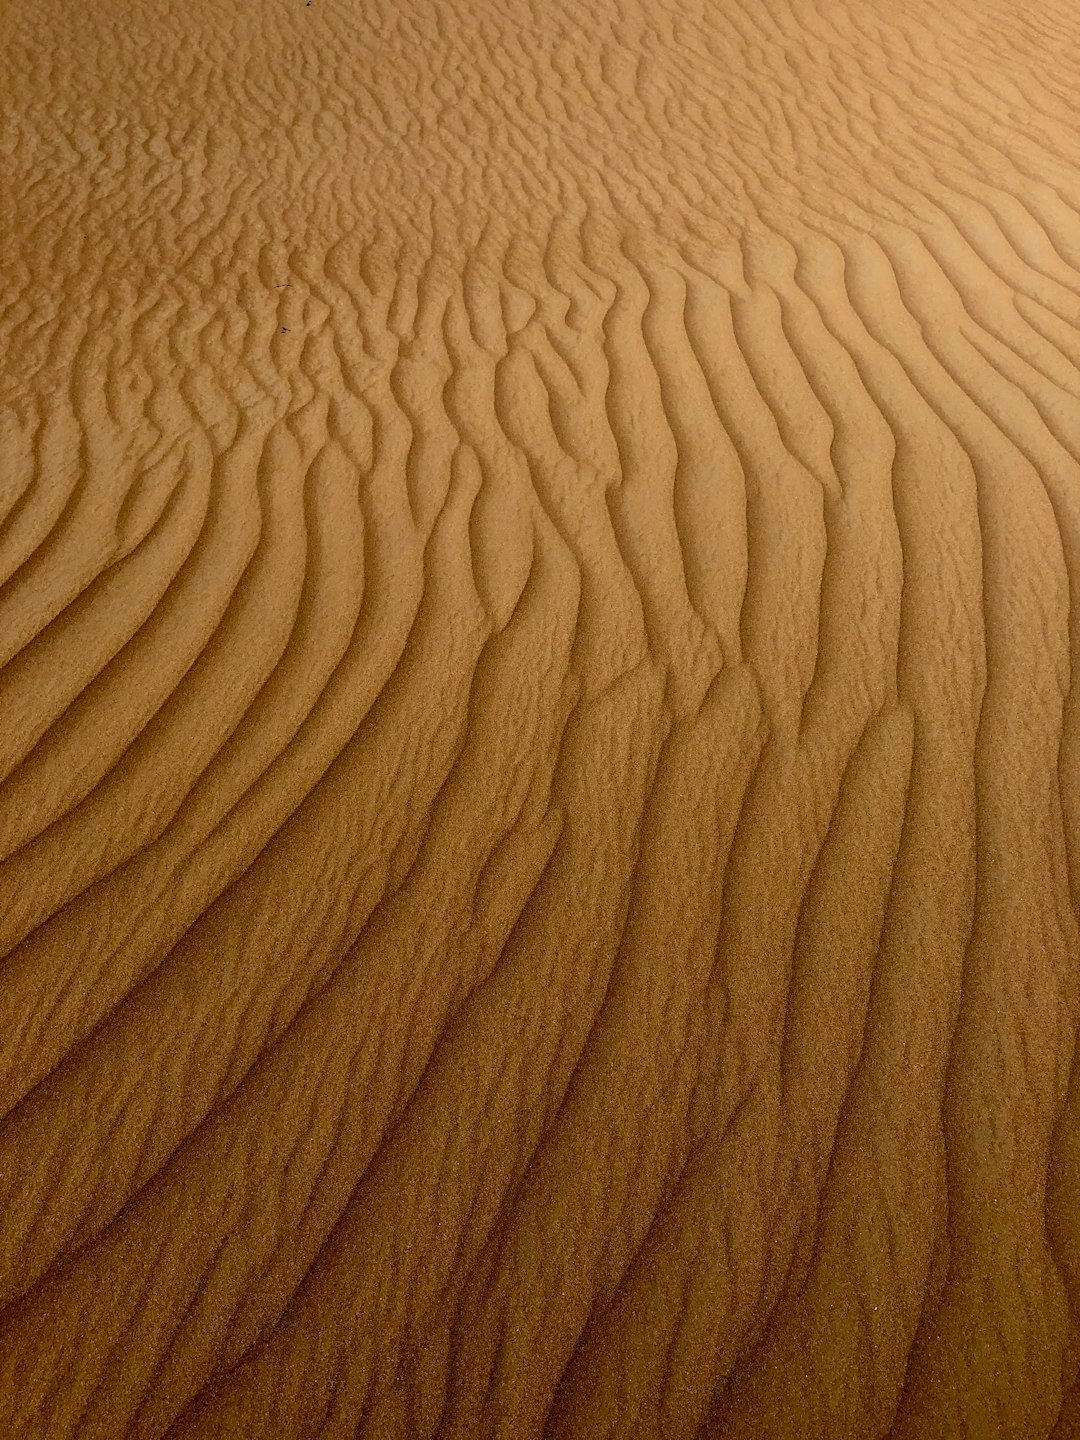 Desert photo spot Margham Sharjah - United Arab Emirates